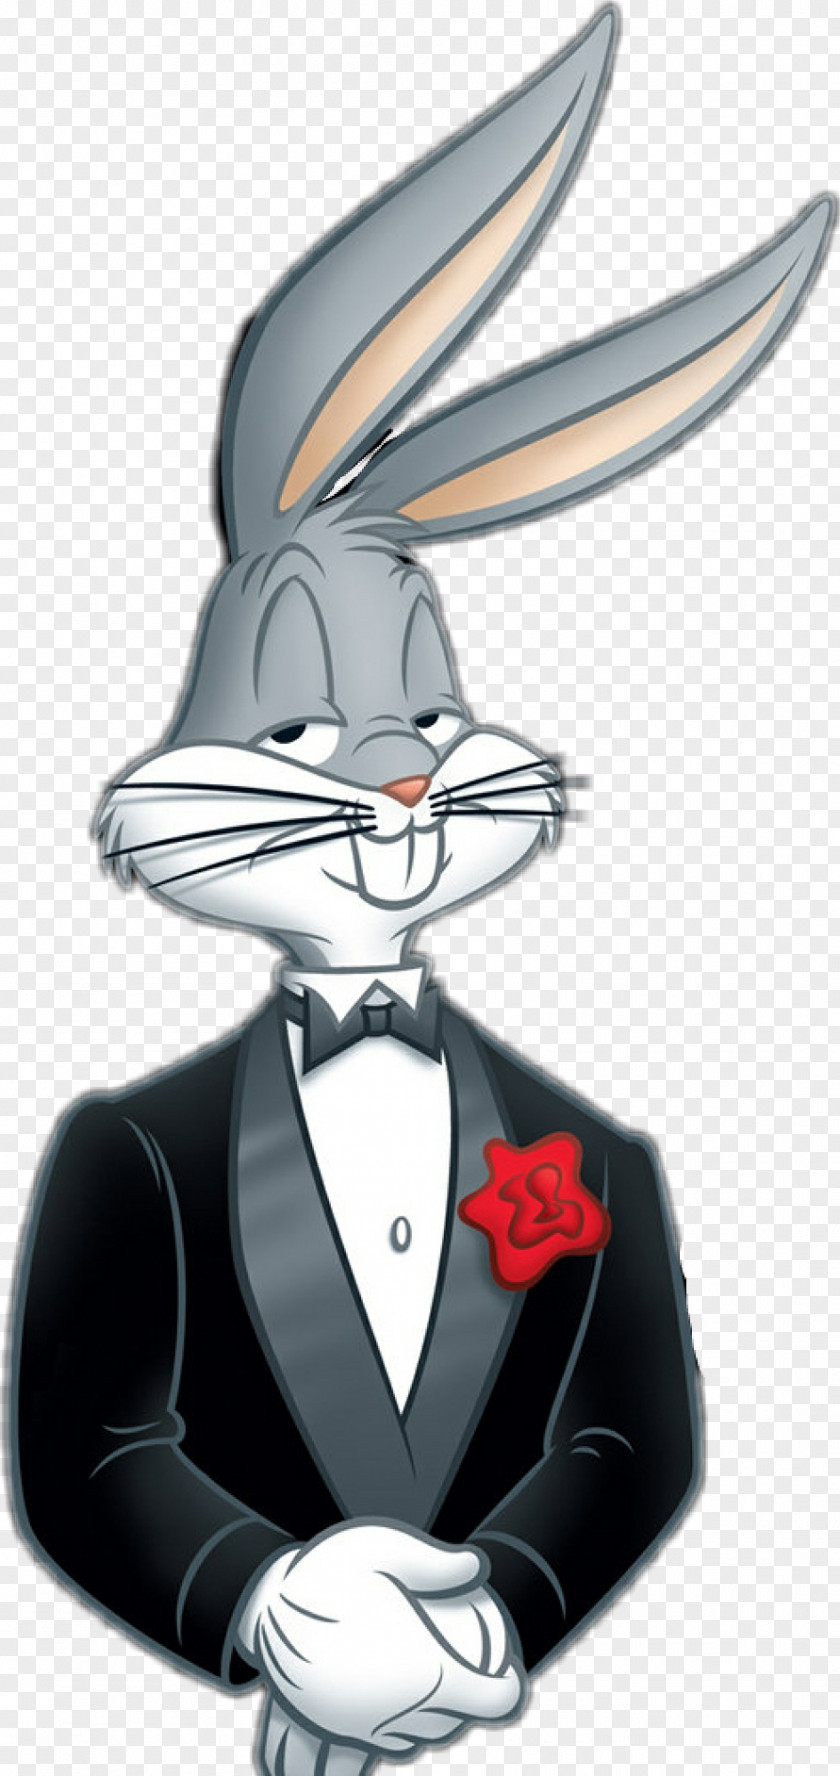 Rabbit Bugs Bunny Tweety Looney Tunes PNG